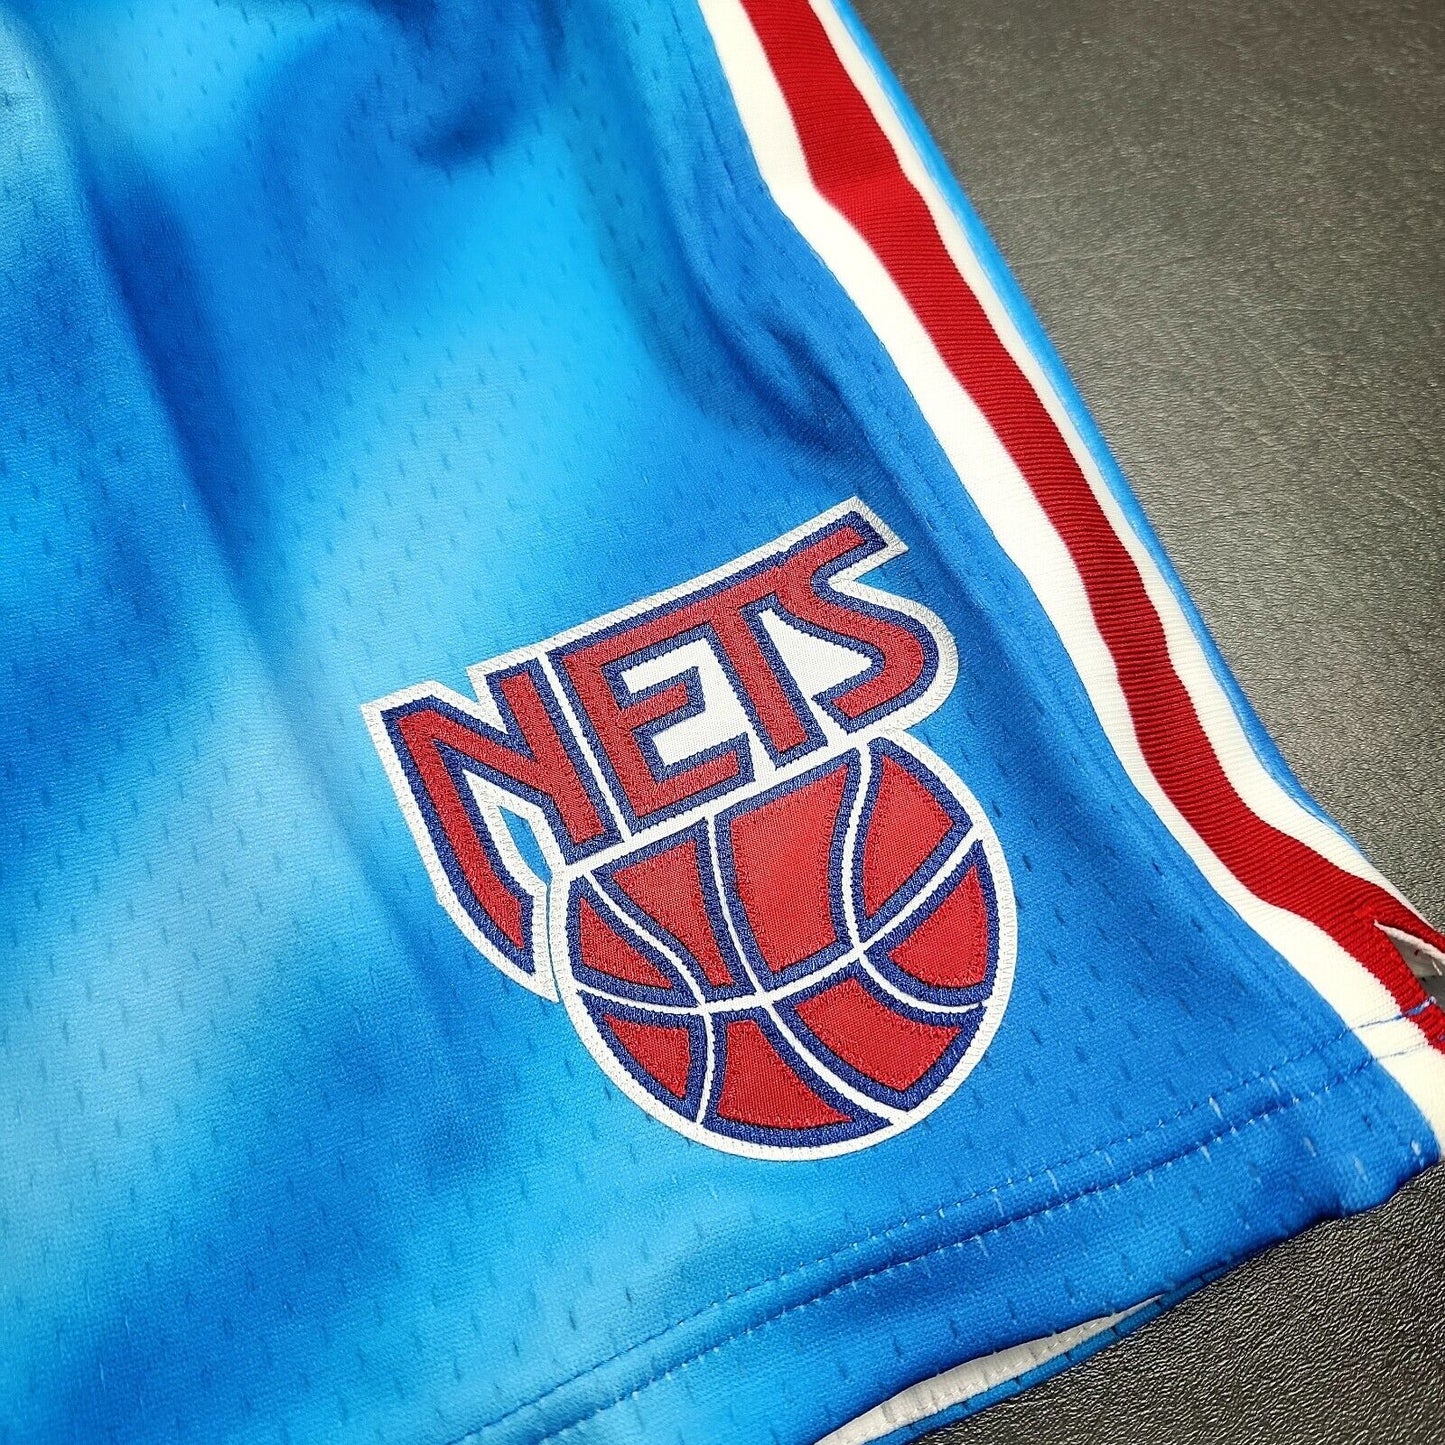 100% Authentic Mitchell & Ness 90 91 NJ Nets Shorts Size 40 M Mens